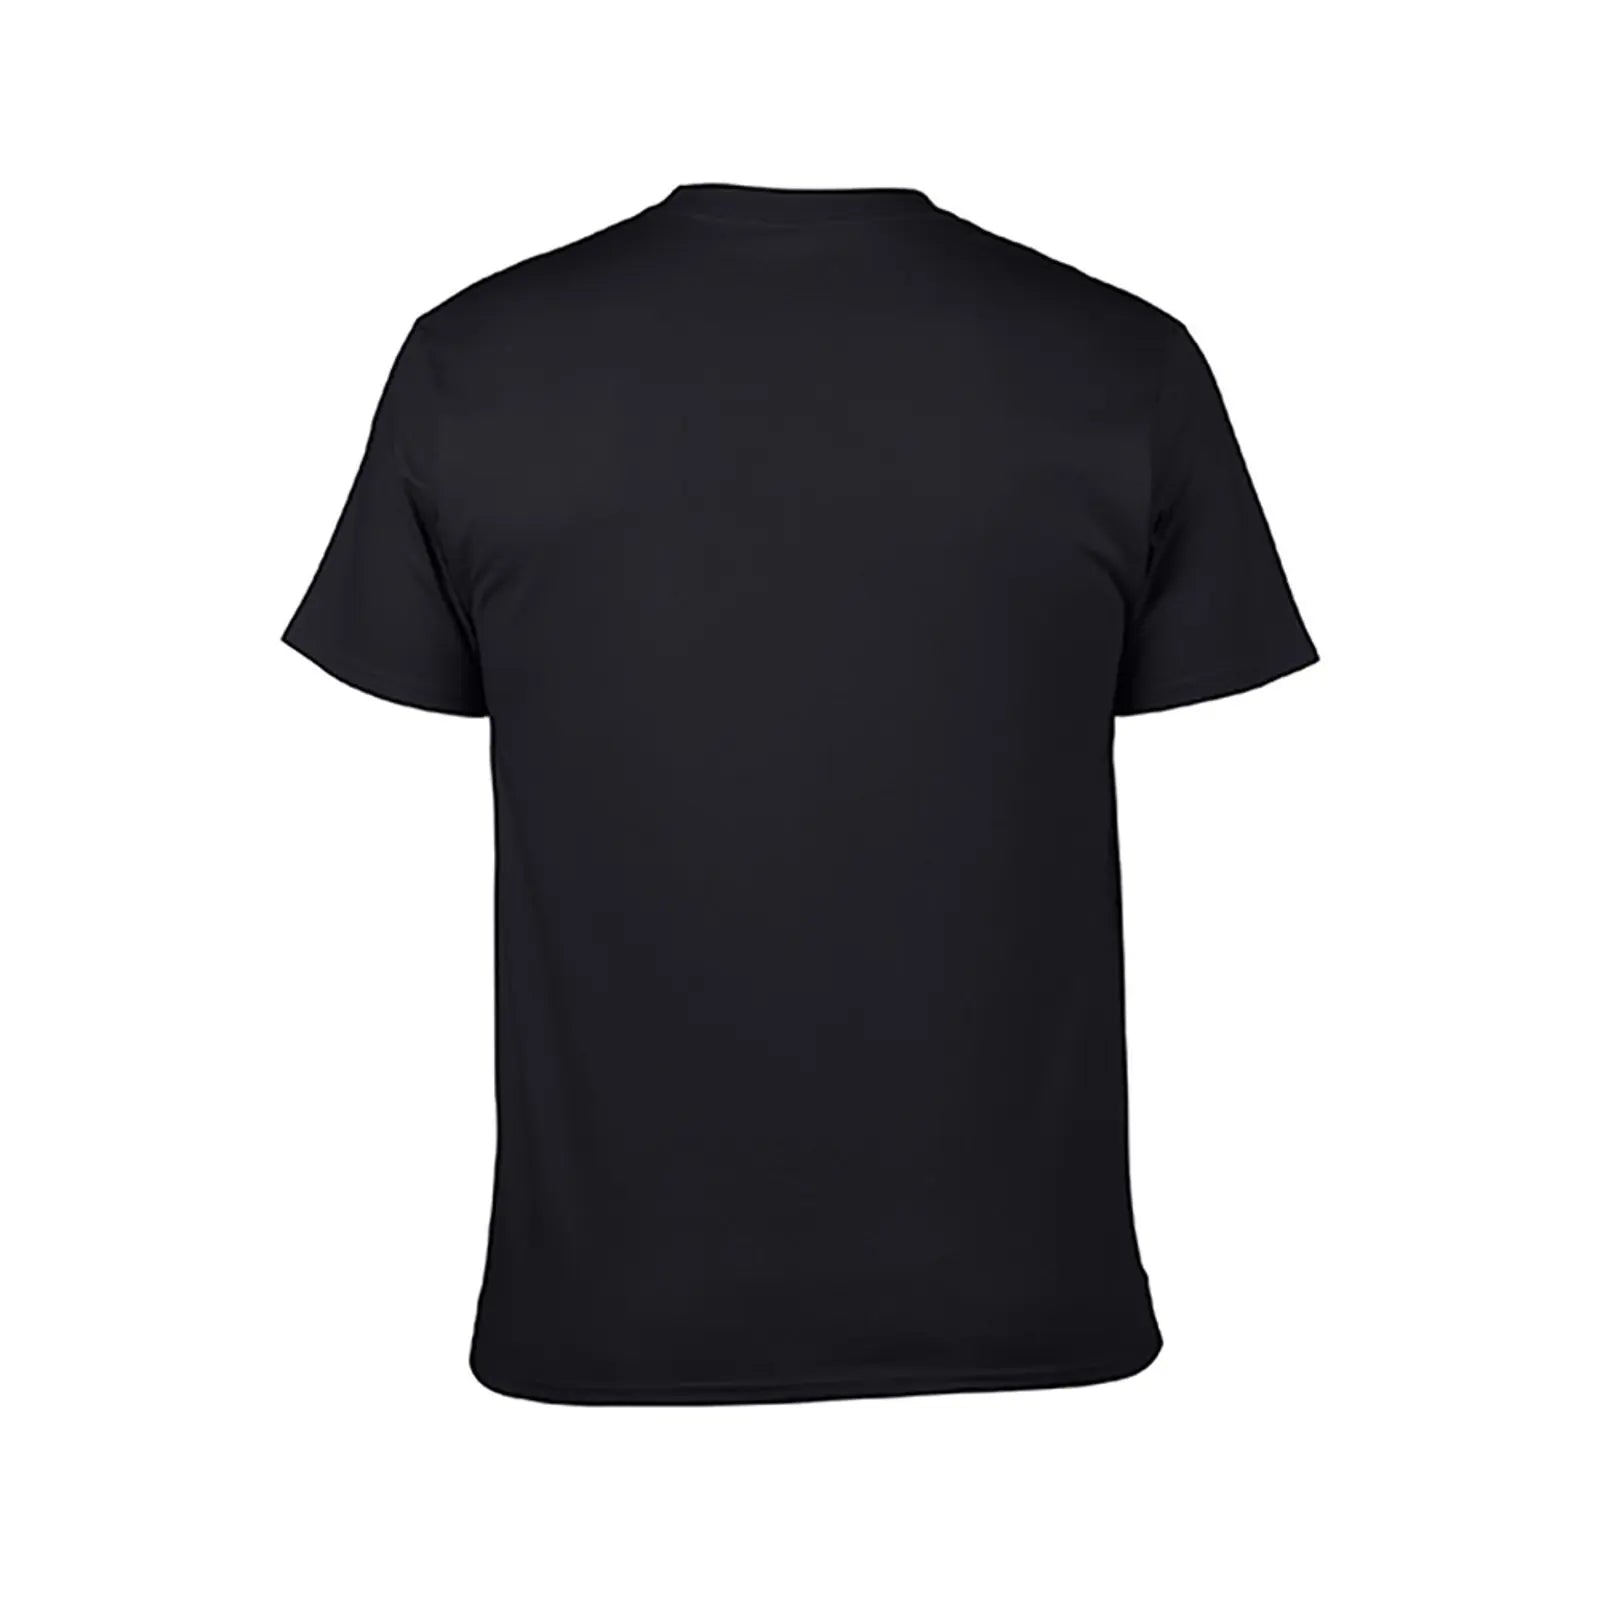 Dimebag Darrell Art -Classic T-Shirt Summer Tops Oversizeds Men's Graphic TShirts - Lizard Vigilante